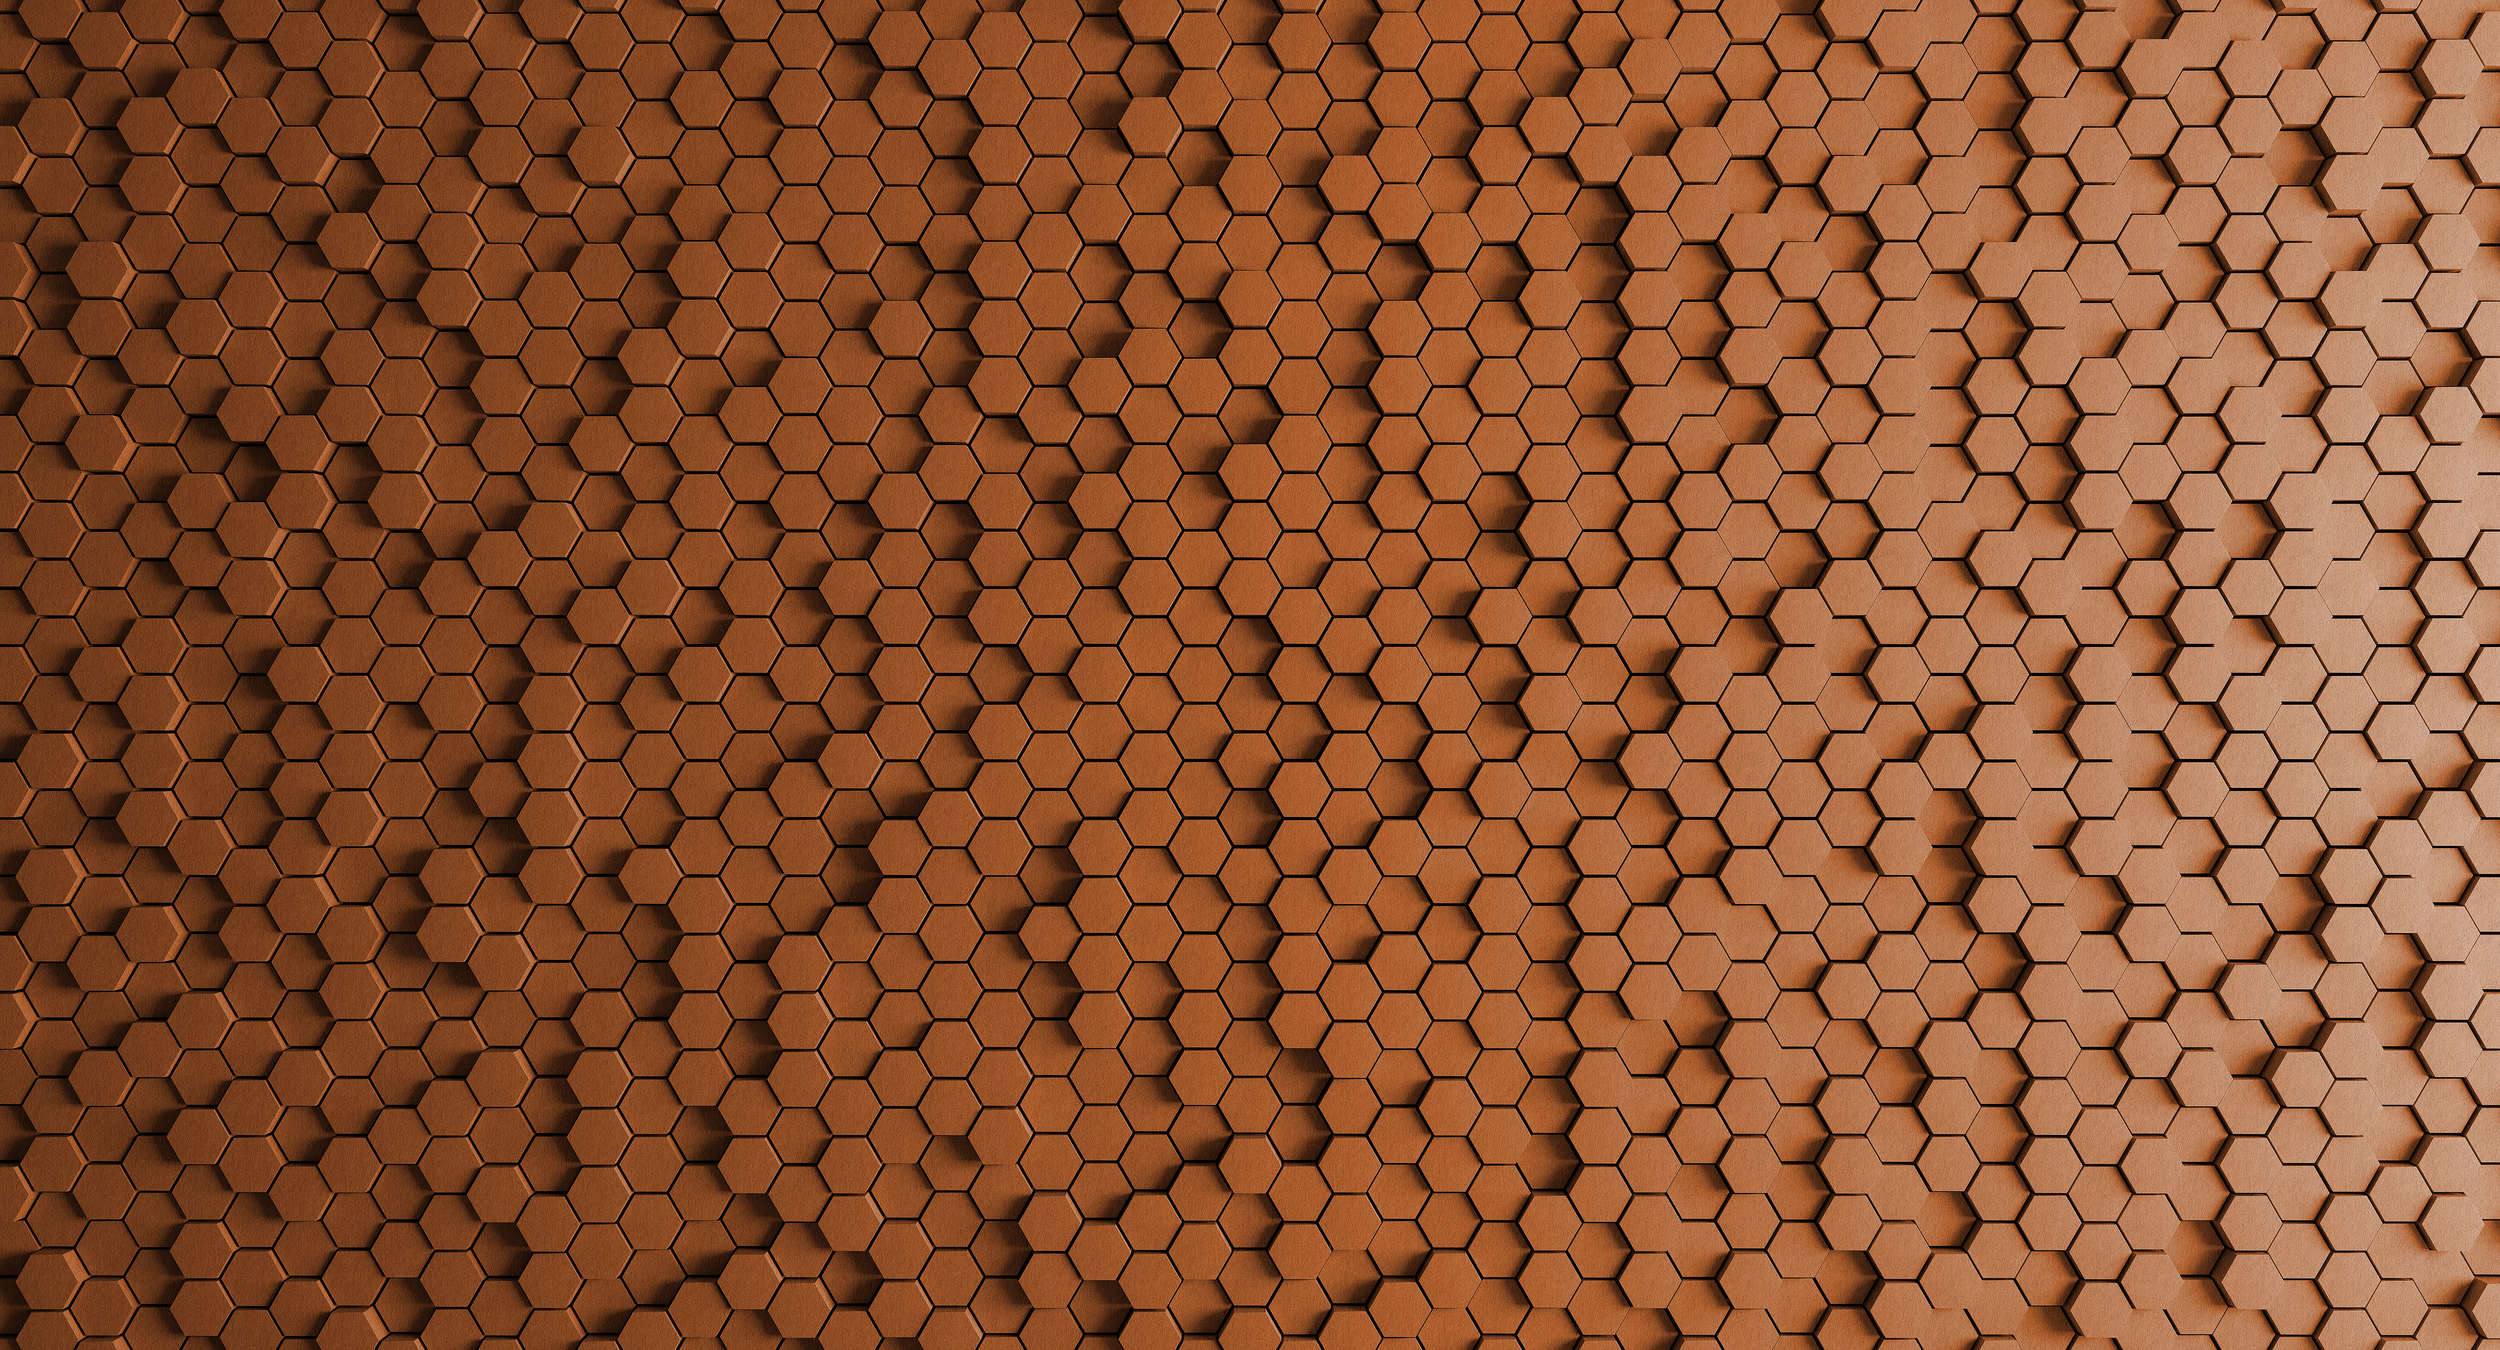             Honeycomb 2 - 3D wallpaper with orange honeycomb design - structure felt - copper, orange | pearl smooth fleece
        